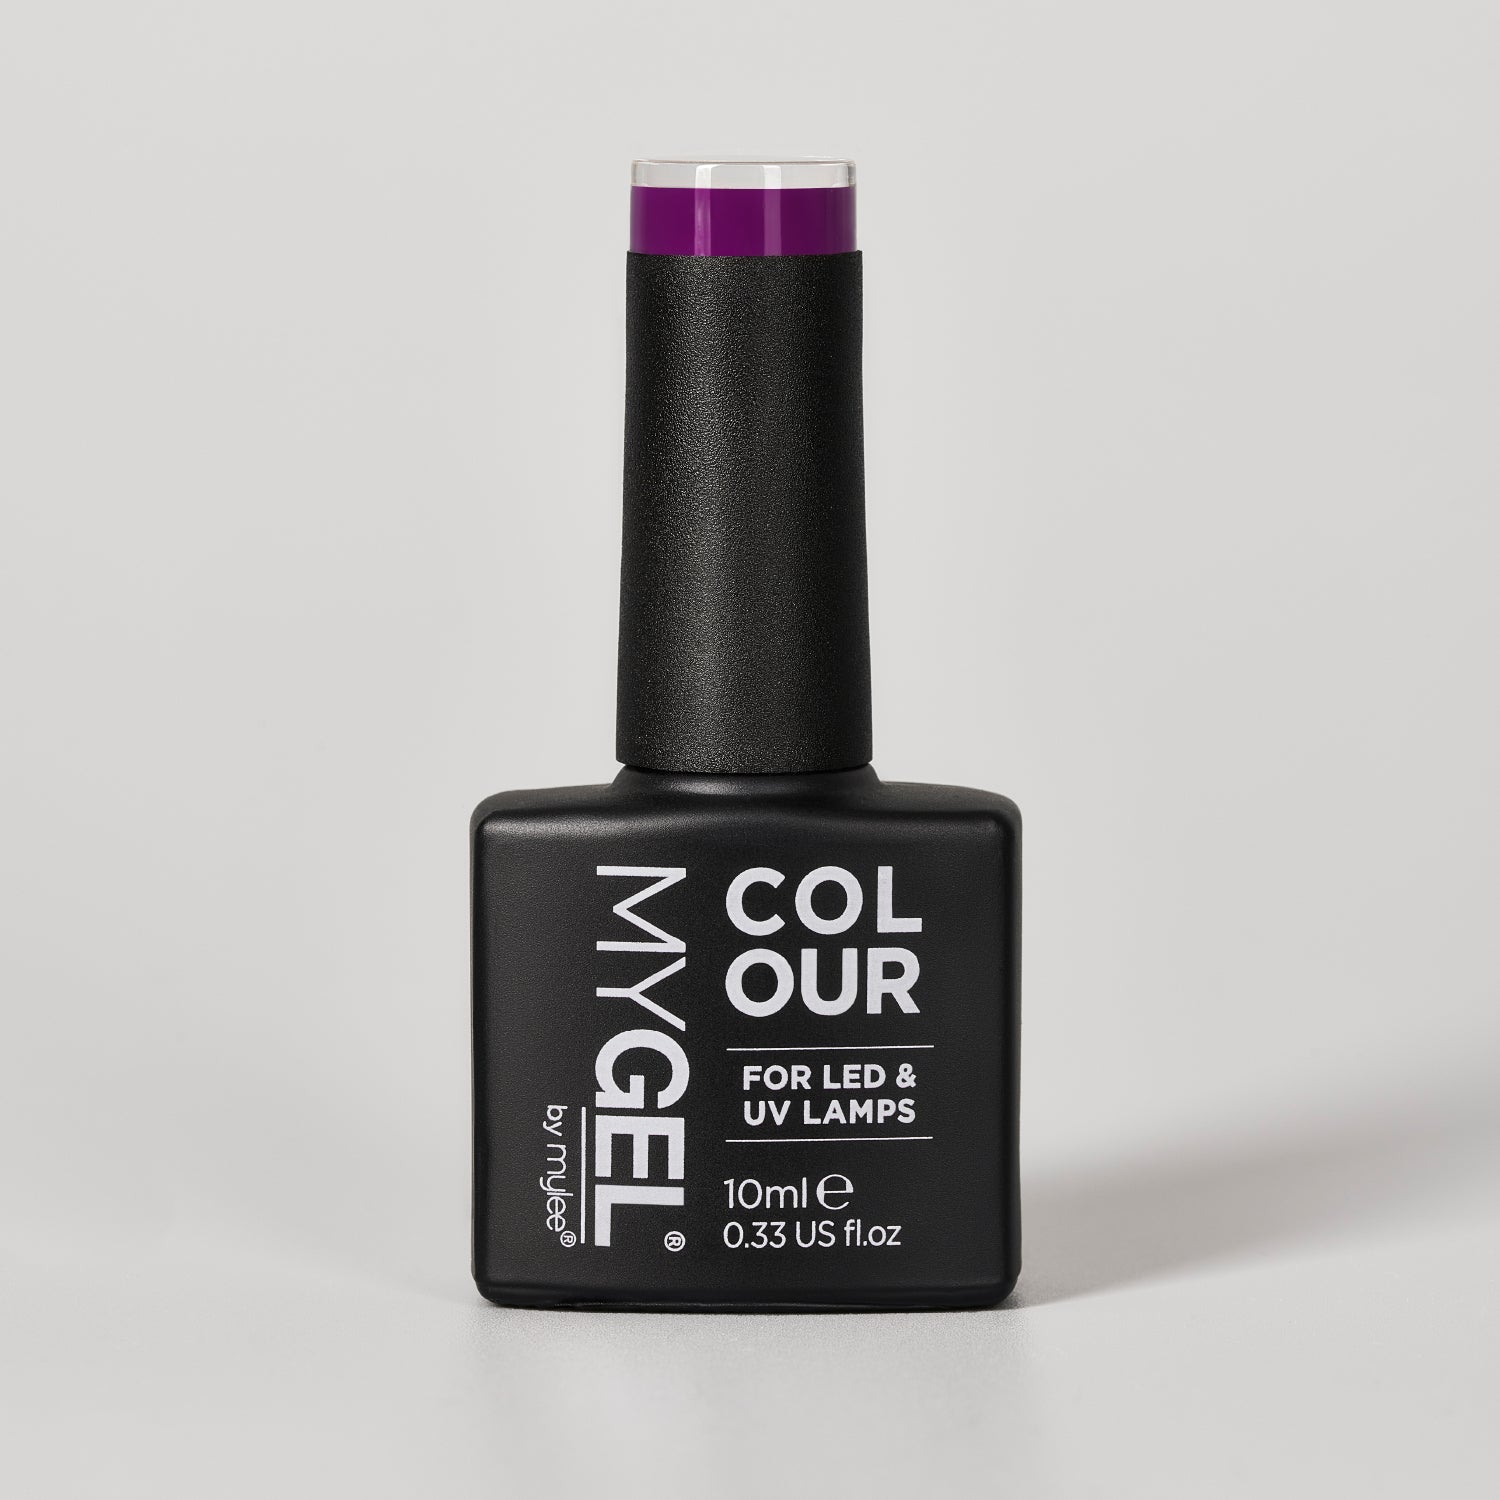 Mylee Lost Memories LED/UV Purple Glitter Gel Nail Polish 10ml – Long Lasting At Home Manicure/Pedicure, High Gloss And Chip Free Wear Nail Varnish